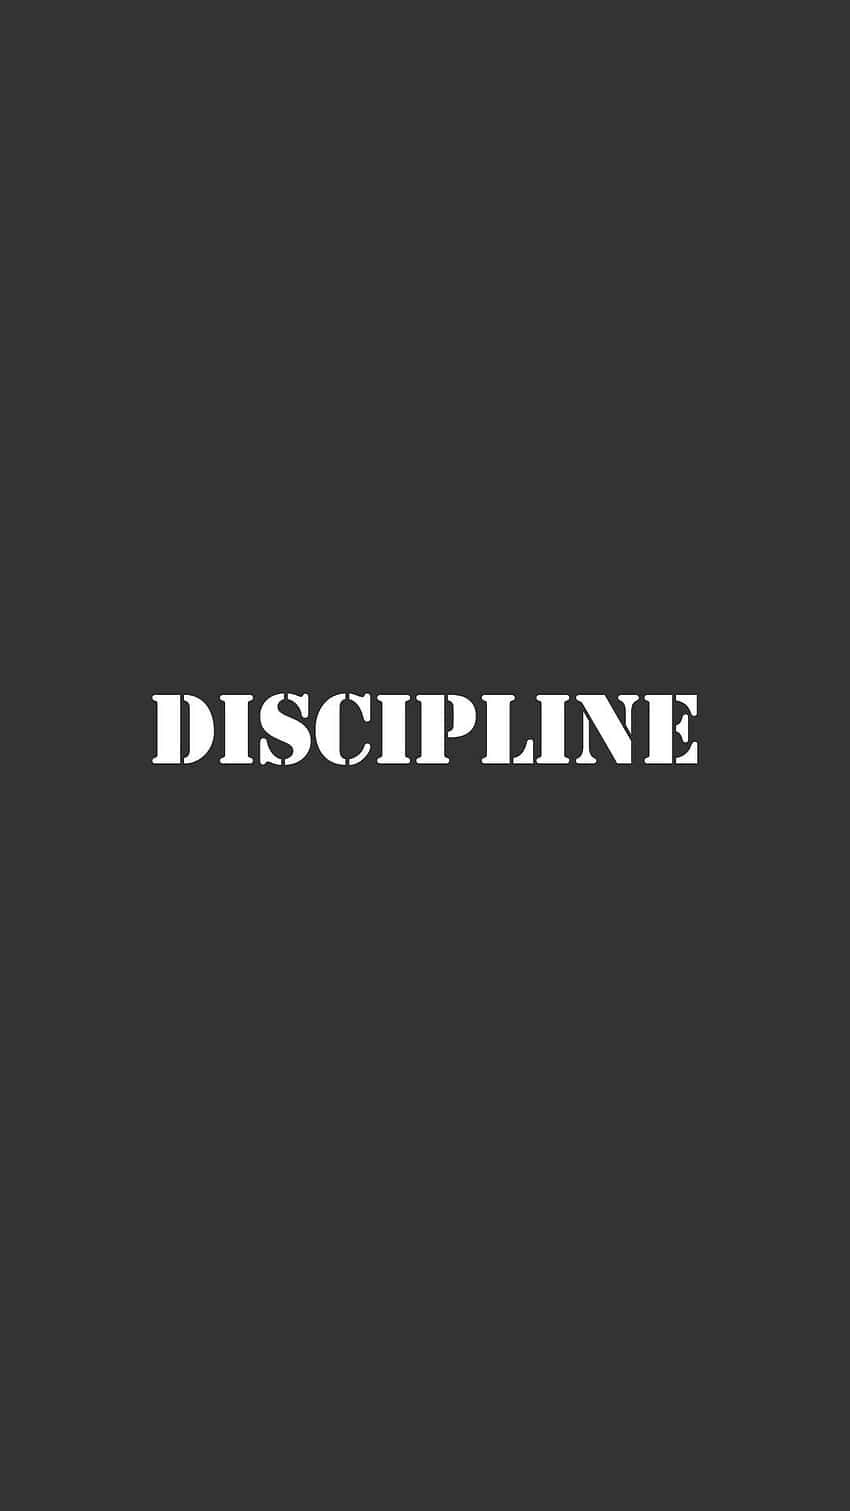 Discipline Concept Simple Background Wallpaper